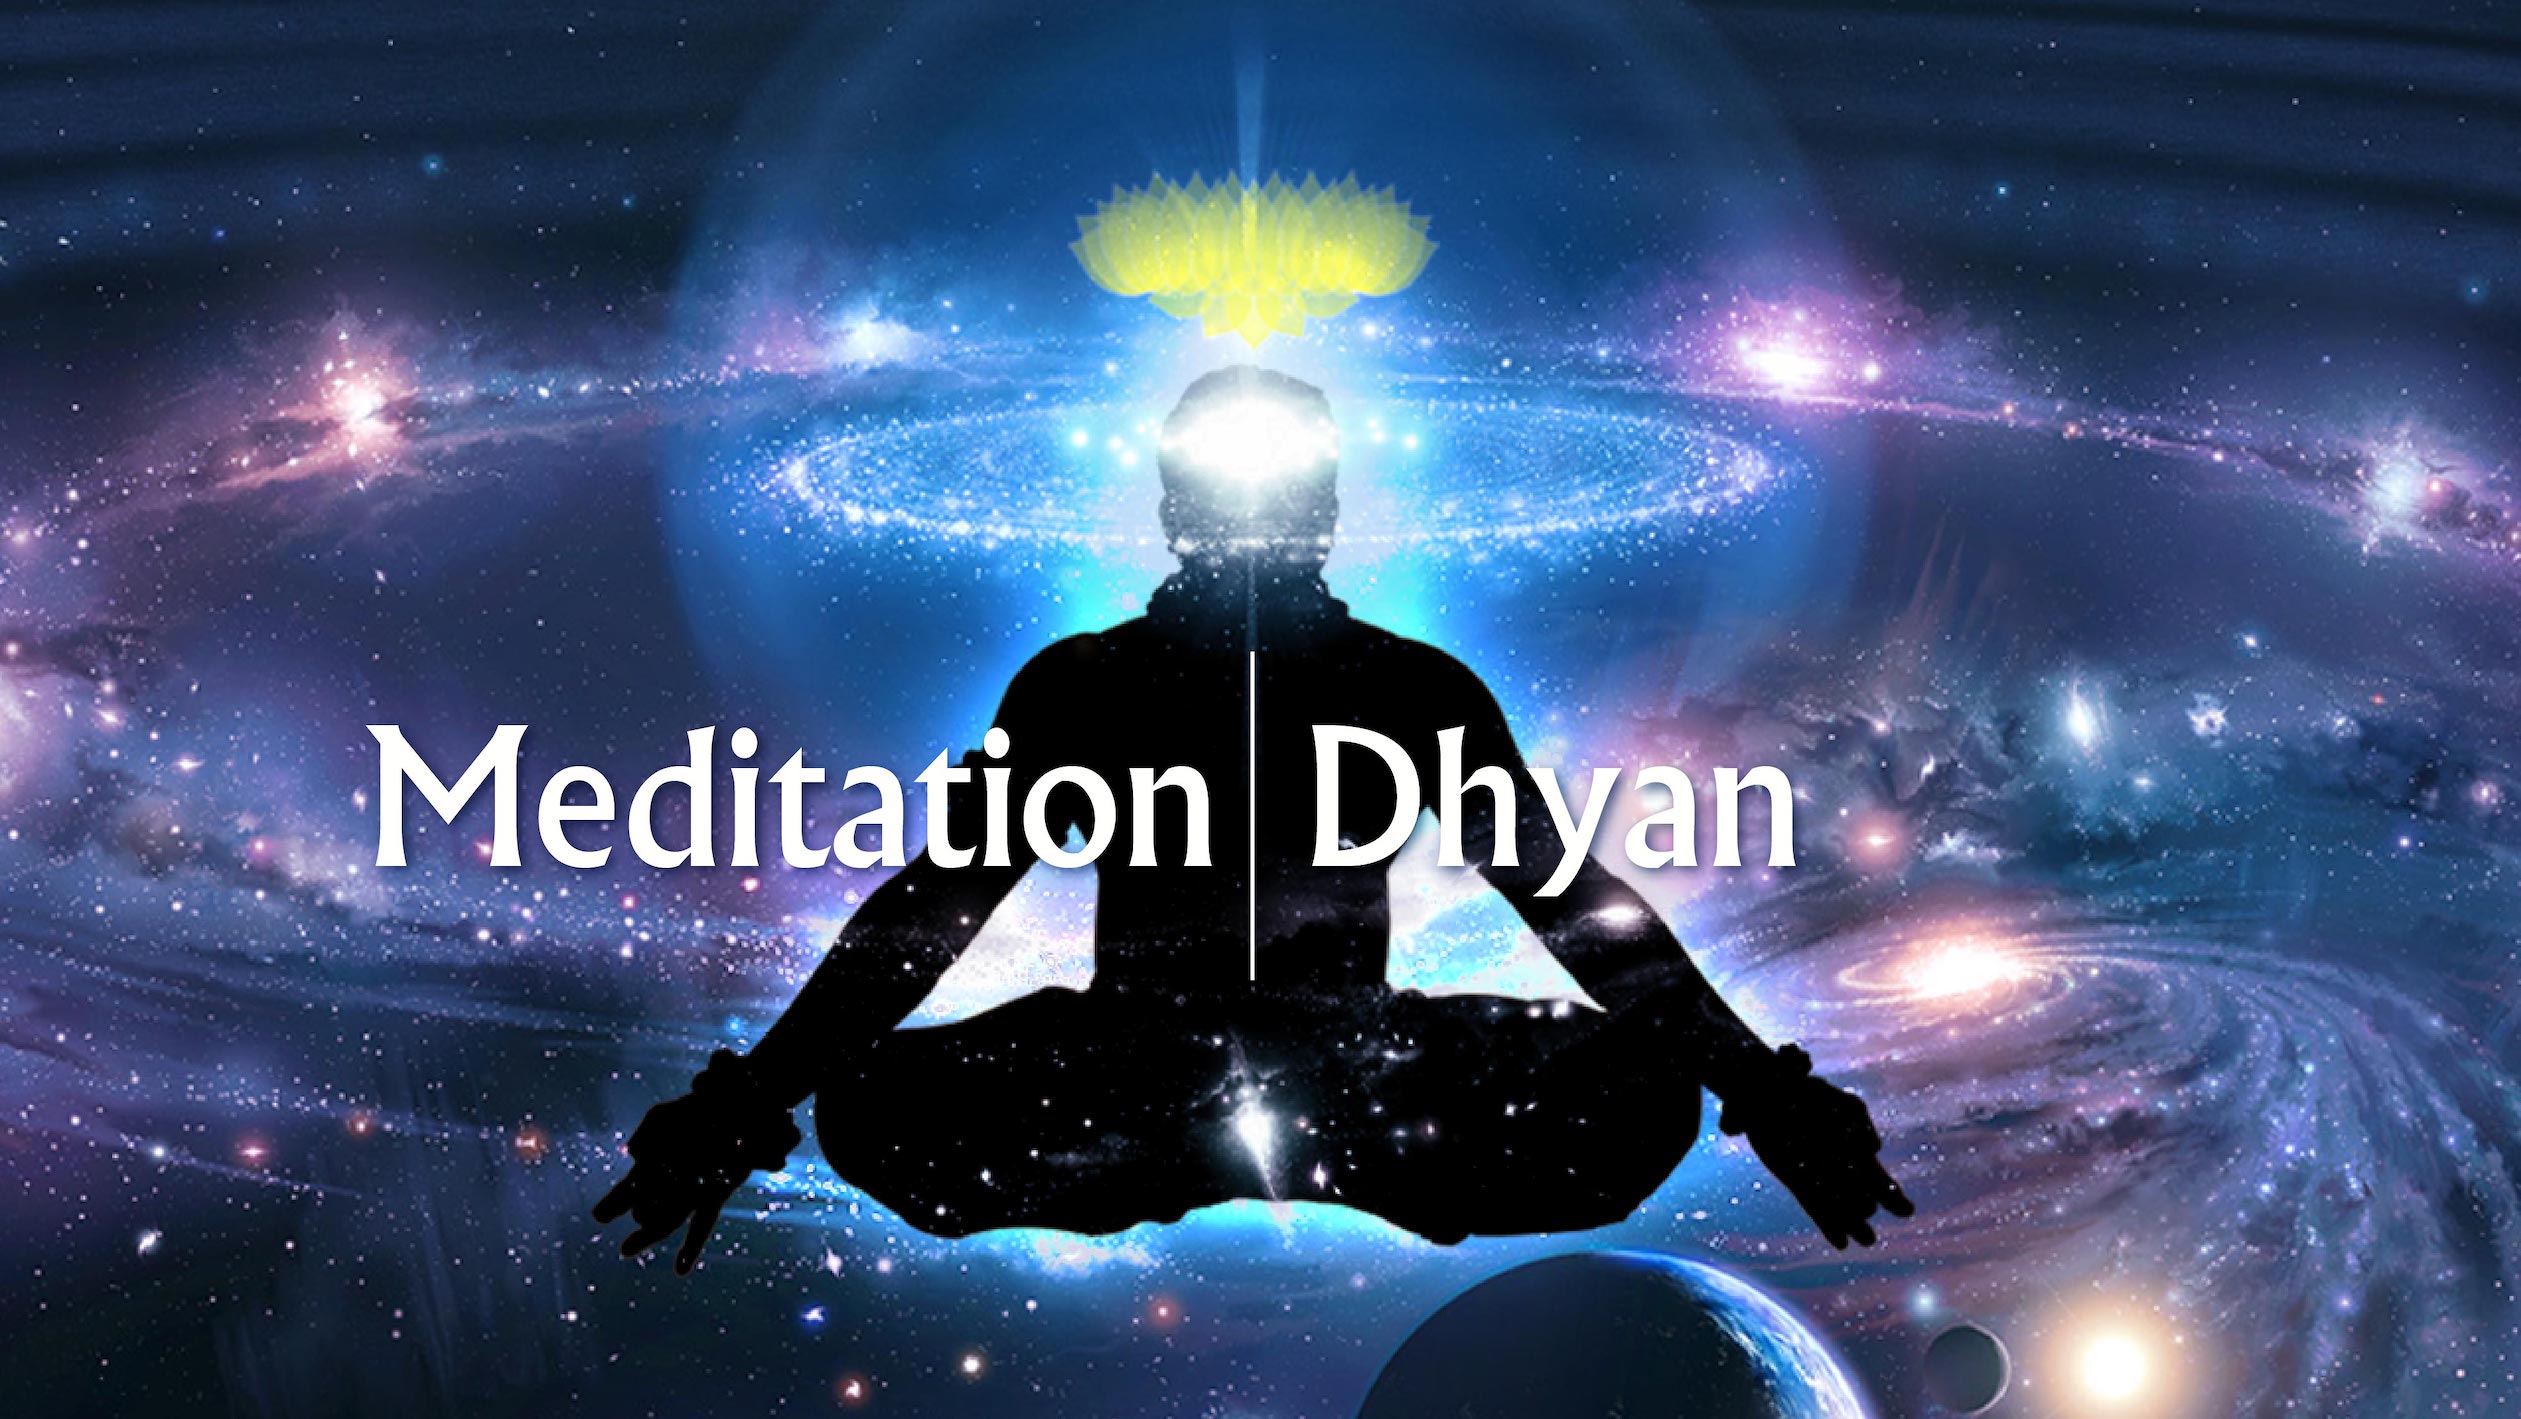 Dhyan/Meditation